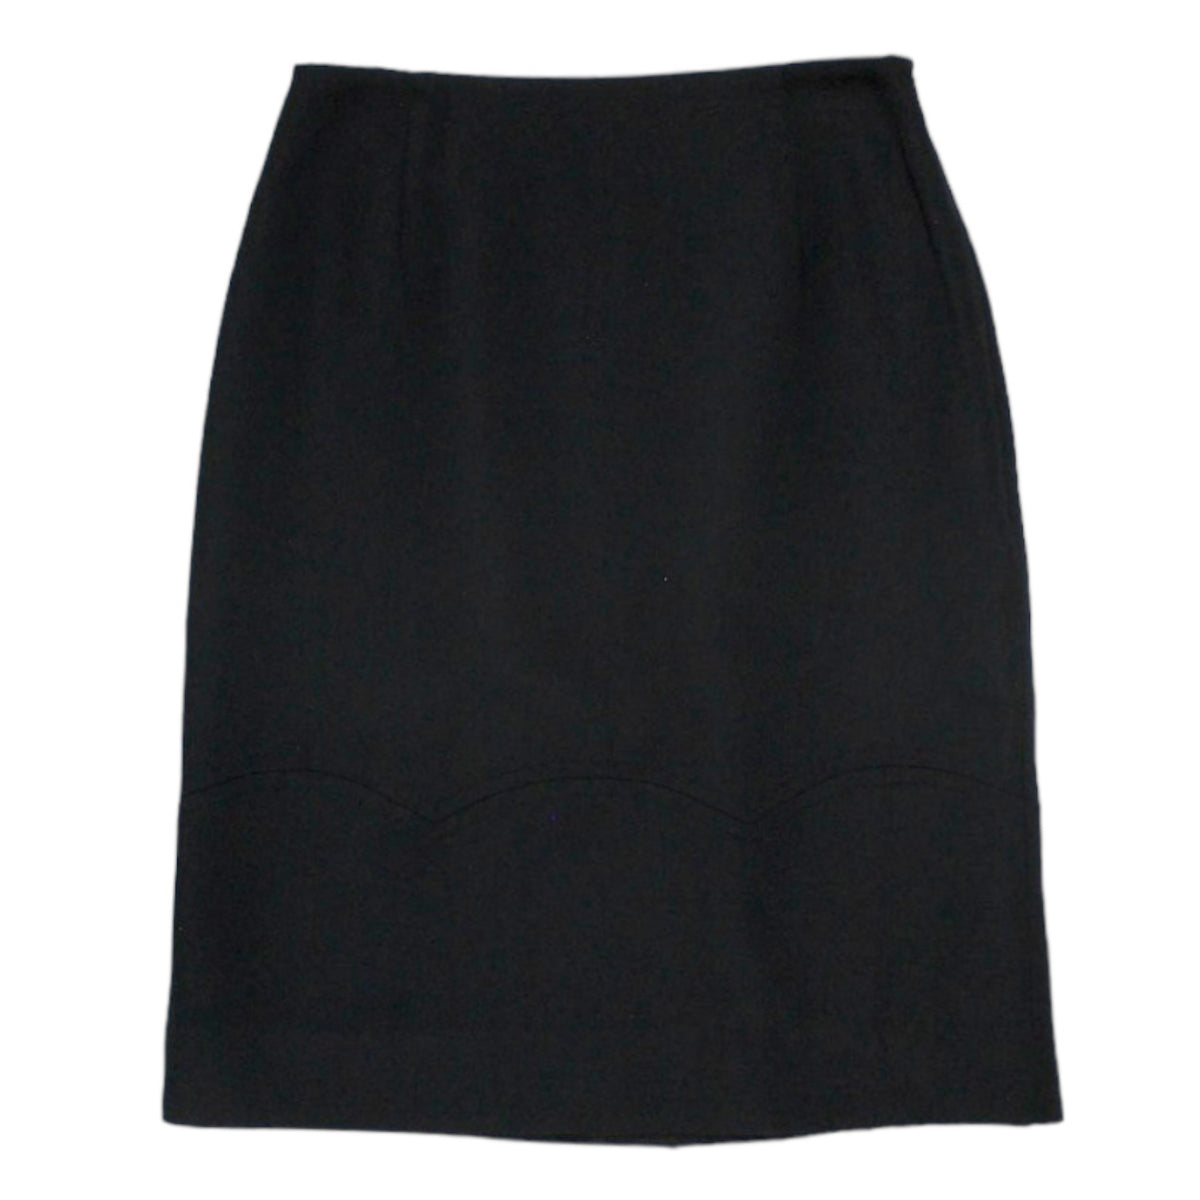 Orla Kiely Black Jacquard Scallop Skirt